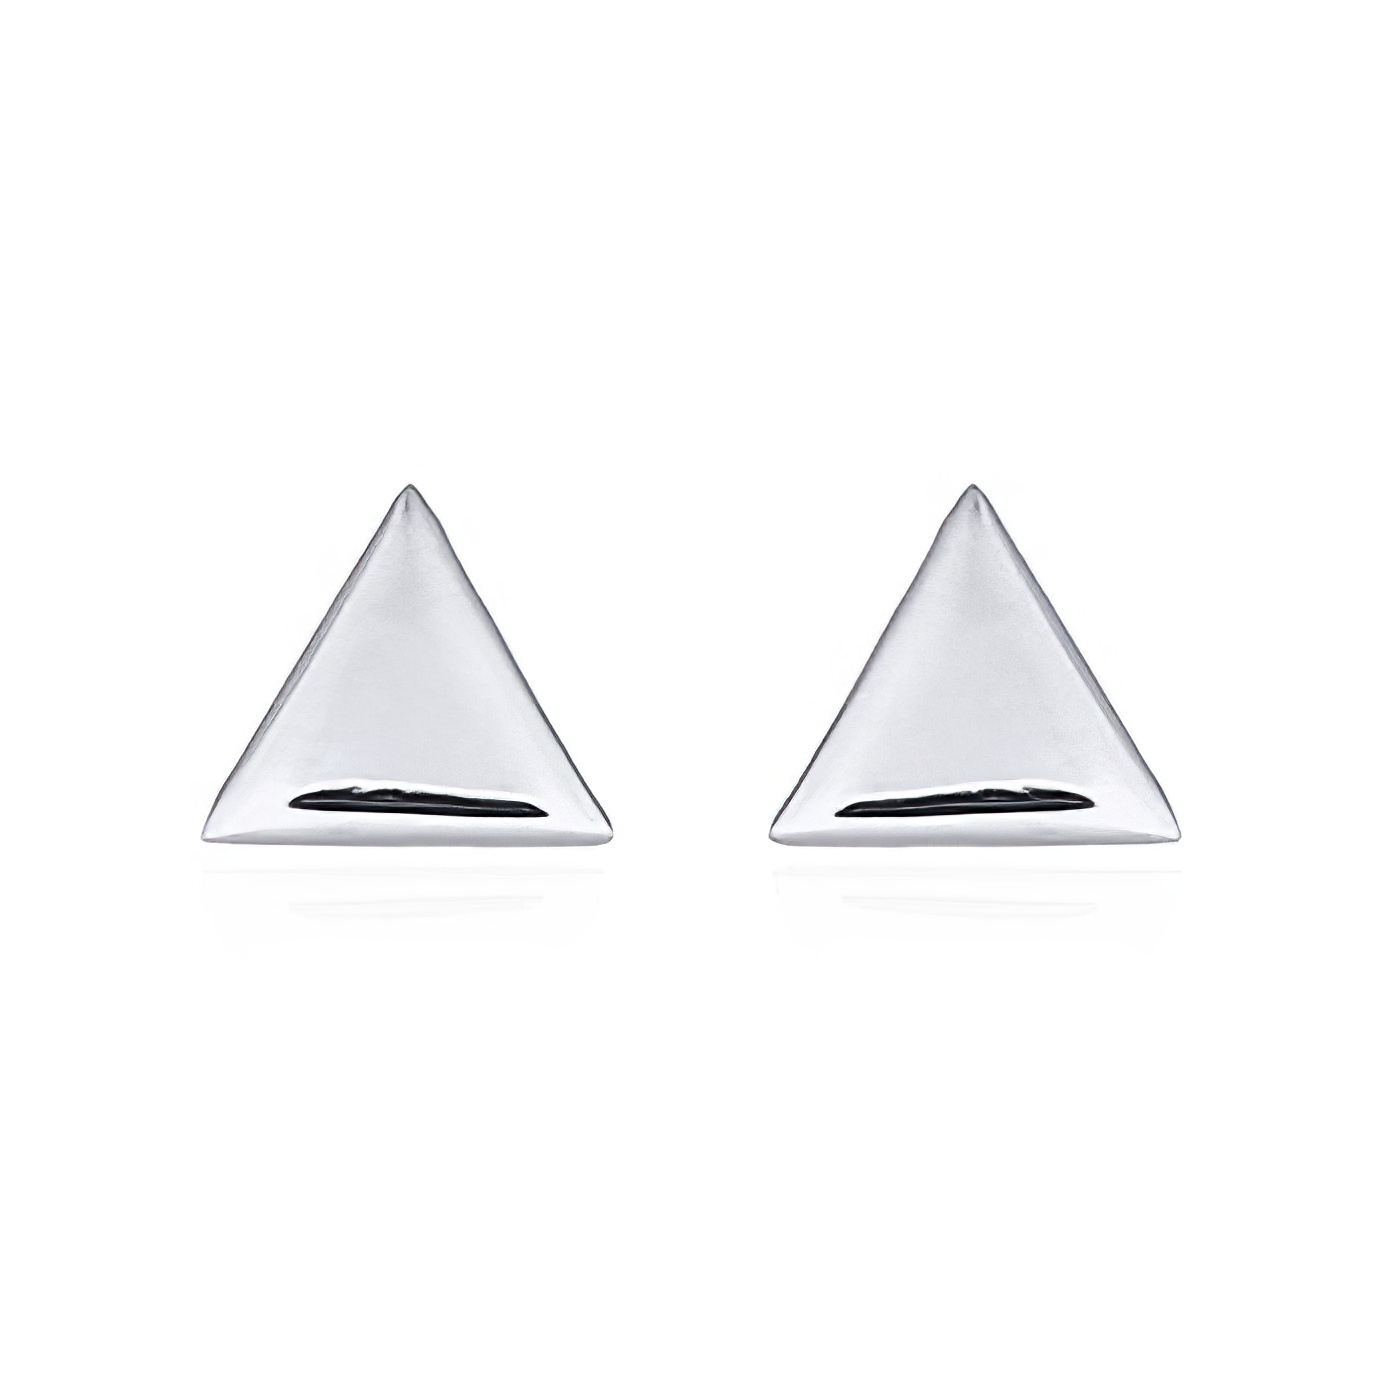 Rhodium Plated Triangle Plain Silver Stud Earrings by BeYindi 